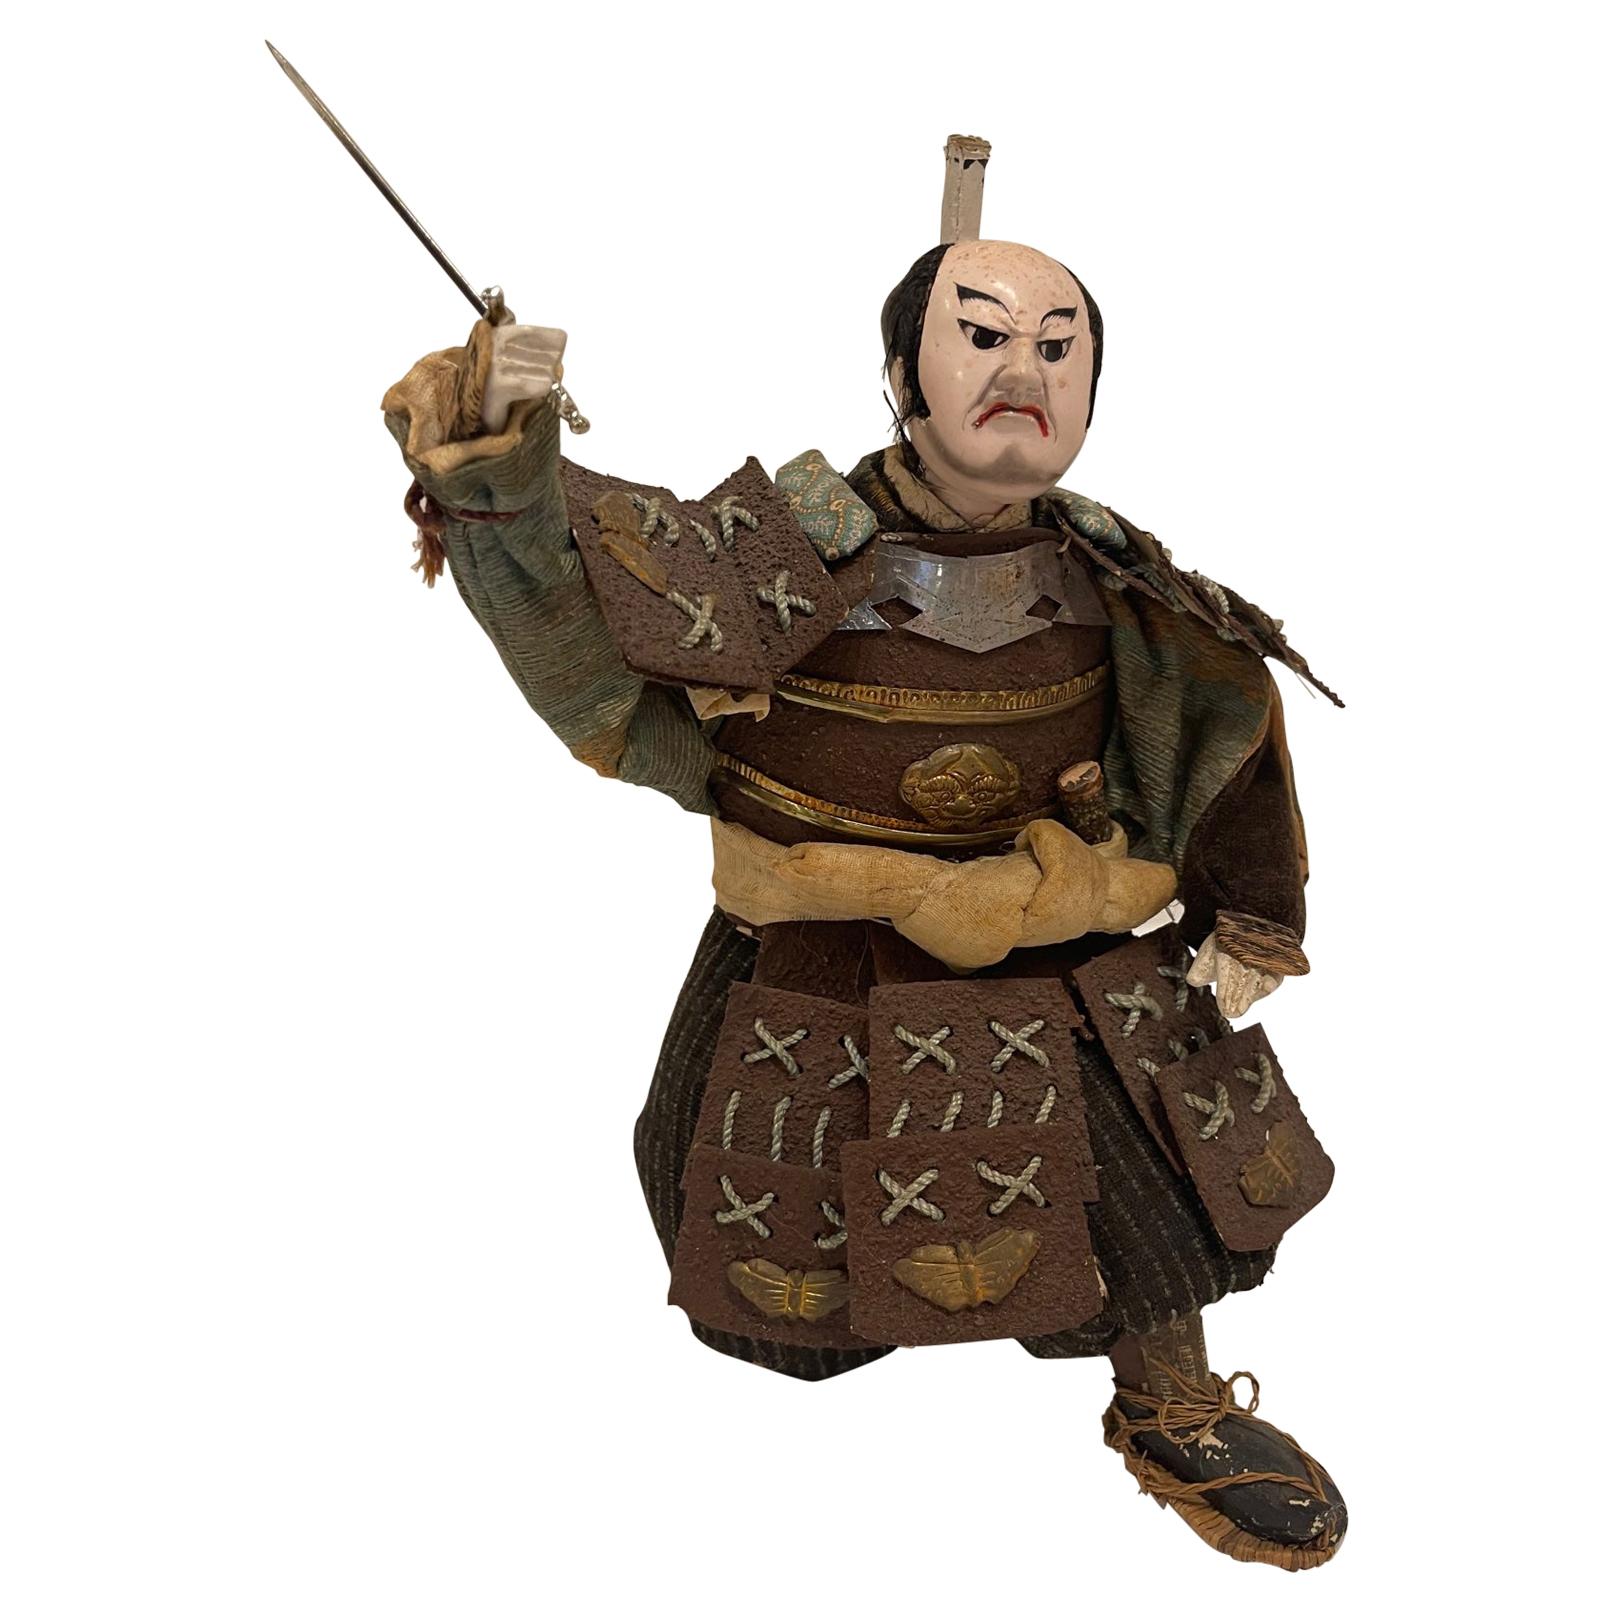 Antique Japanese Meiji Period Kneeling Samurai Warrior, Circa 1870-1880